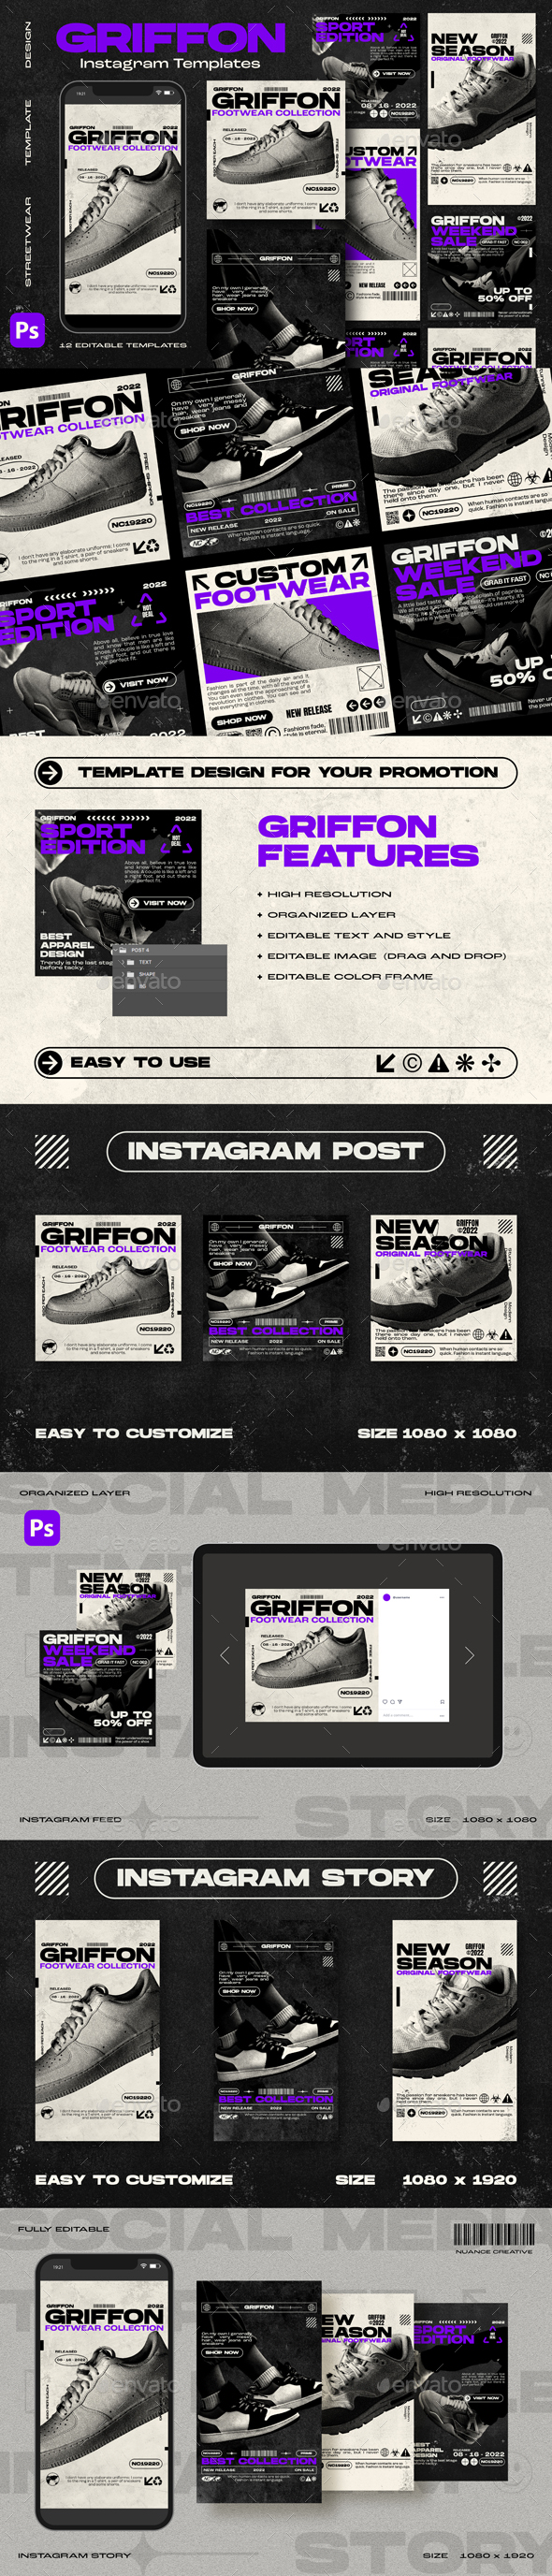 [DOWNLOAD]Griffon Instagram Template Design